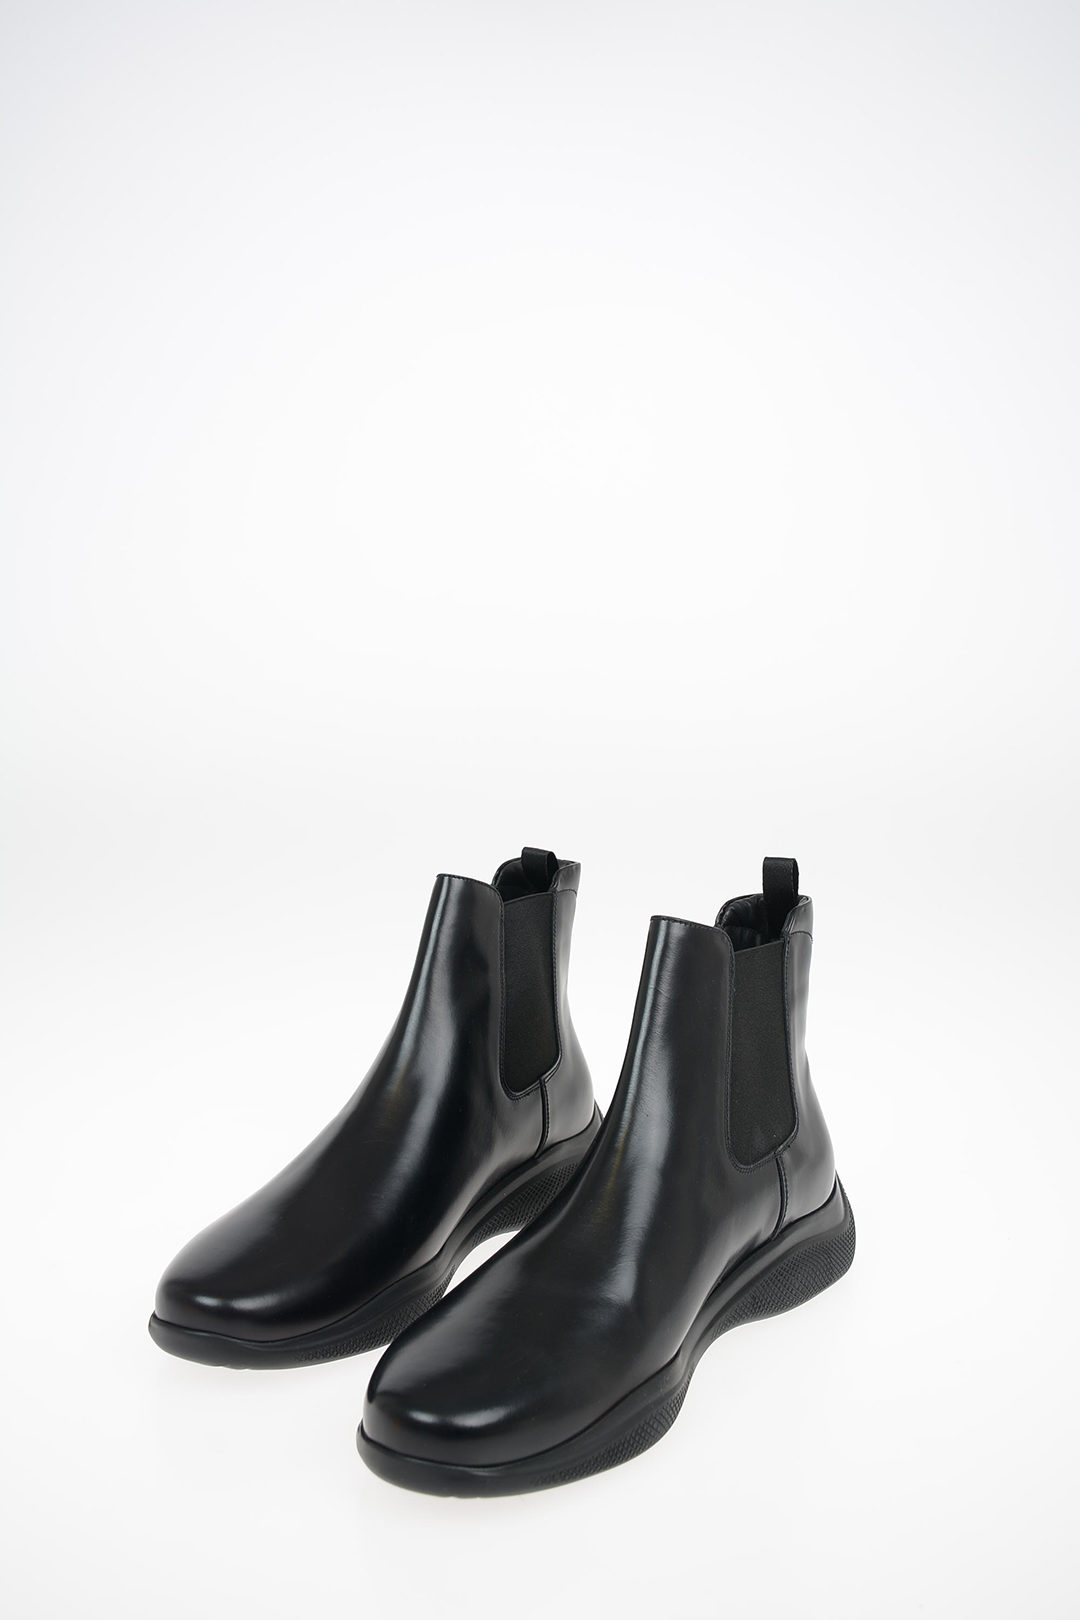 Prada Brushed Leather Chelsea Boots men - Glamood Outlet